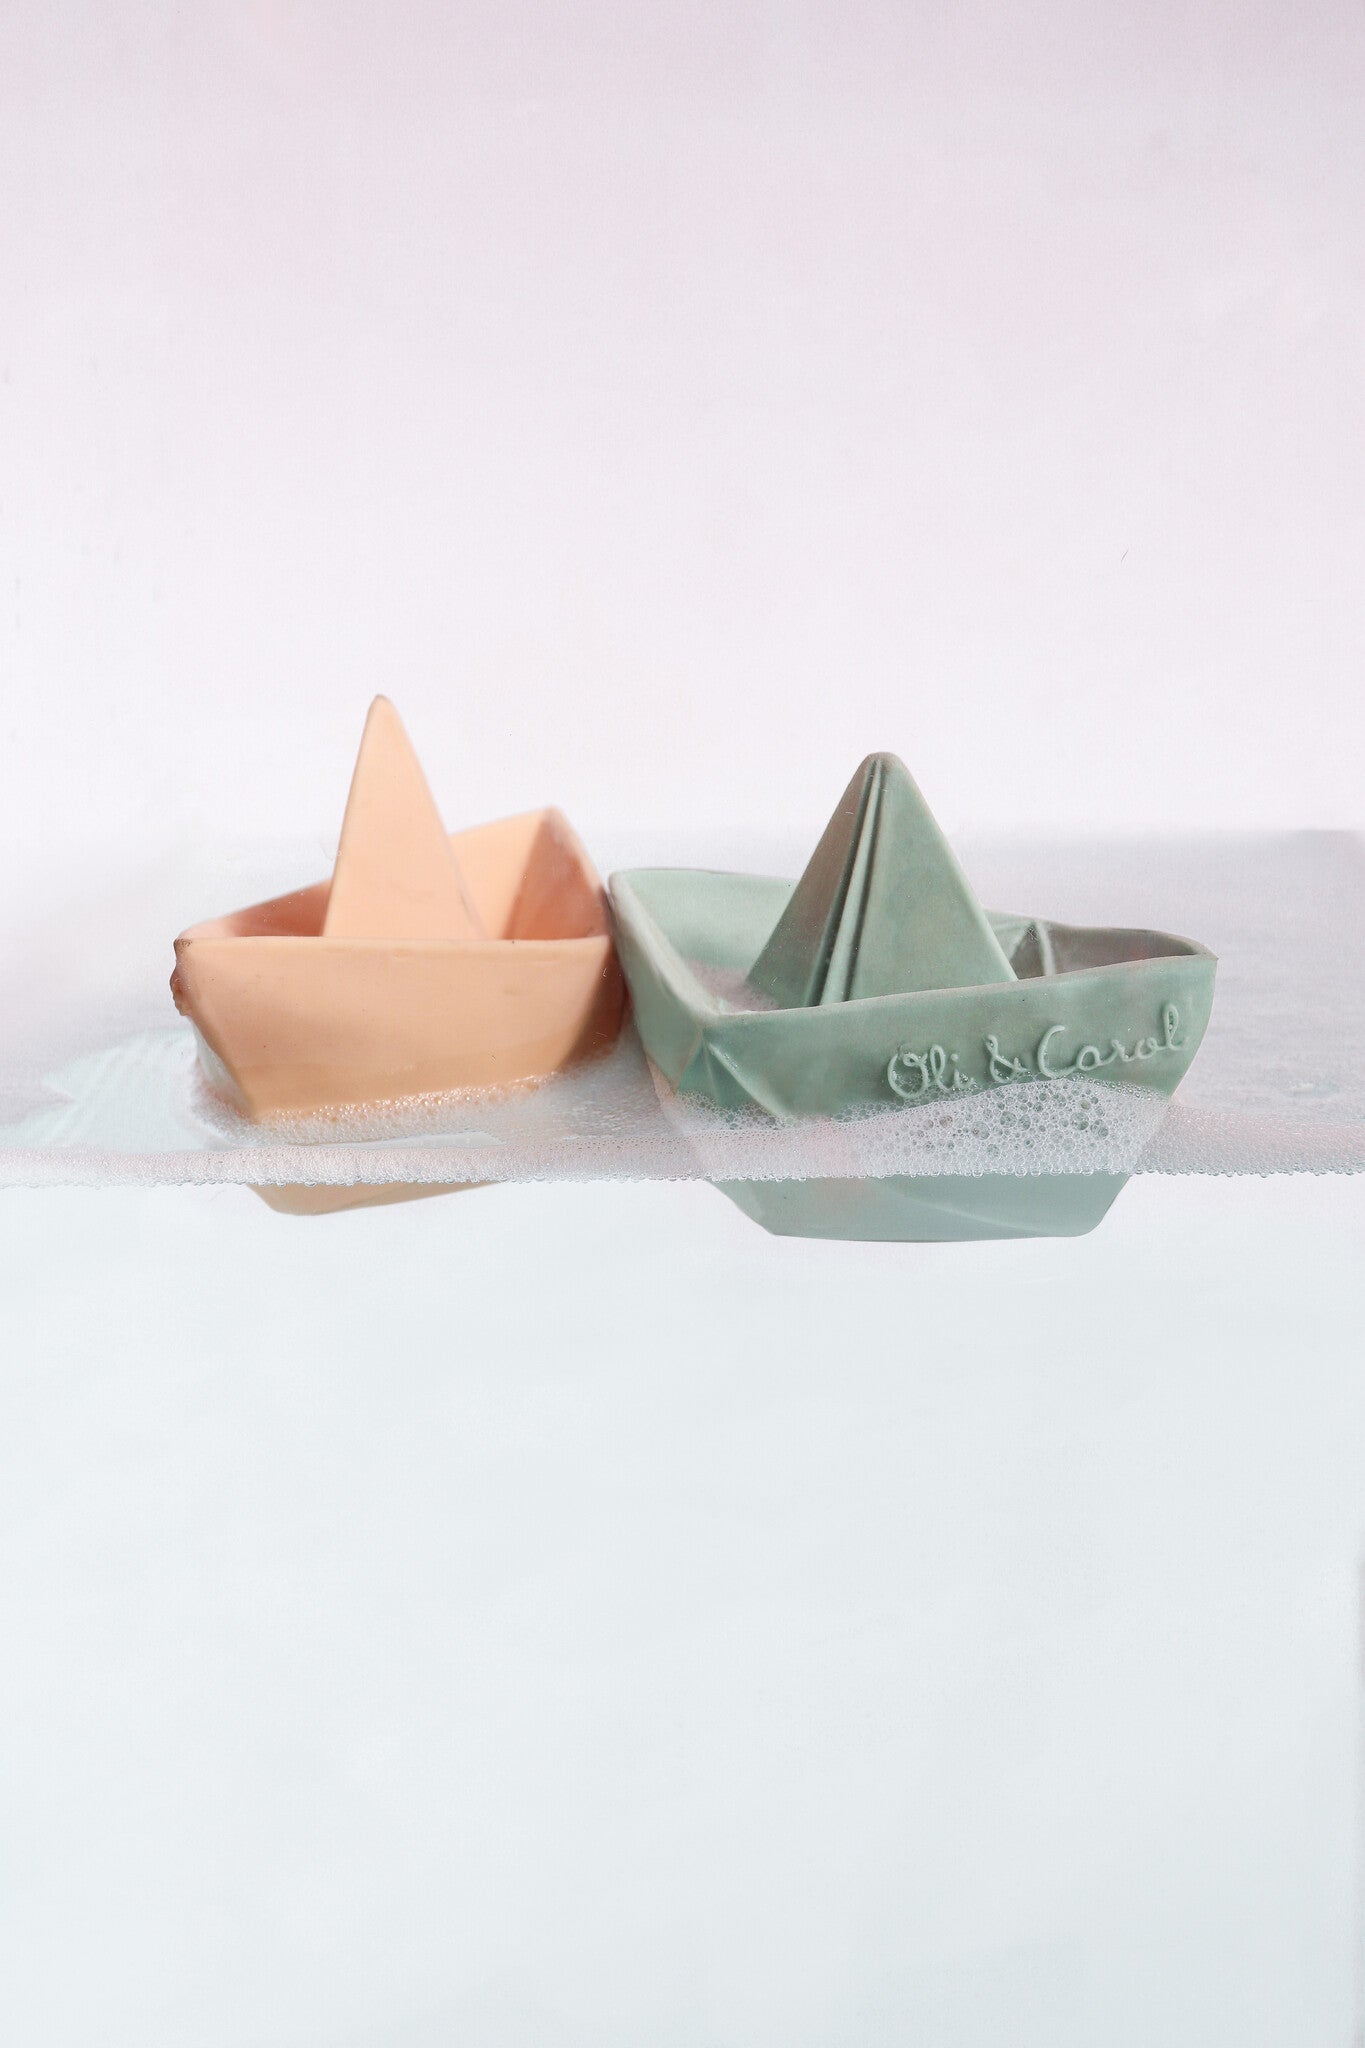 Oli&Carol_Origami Boats (36)